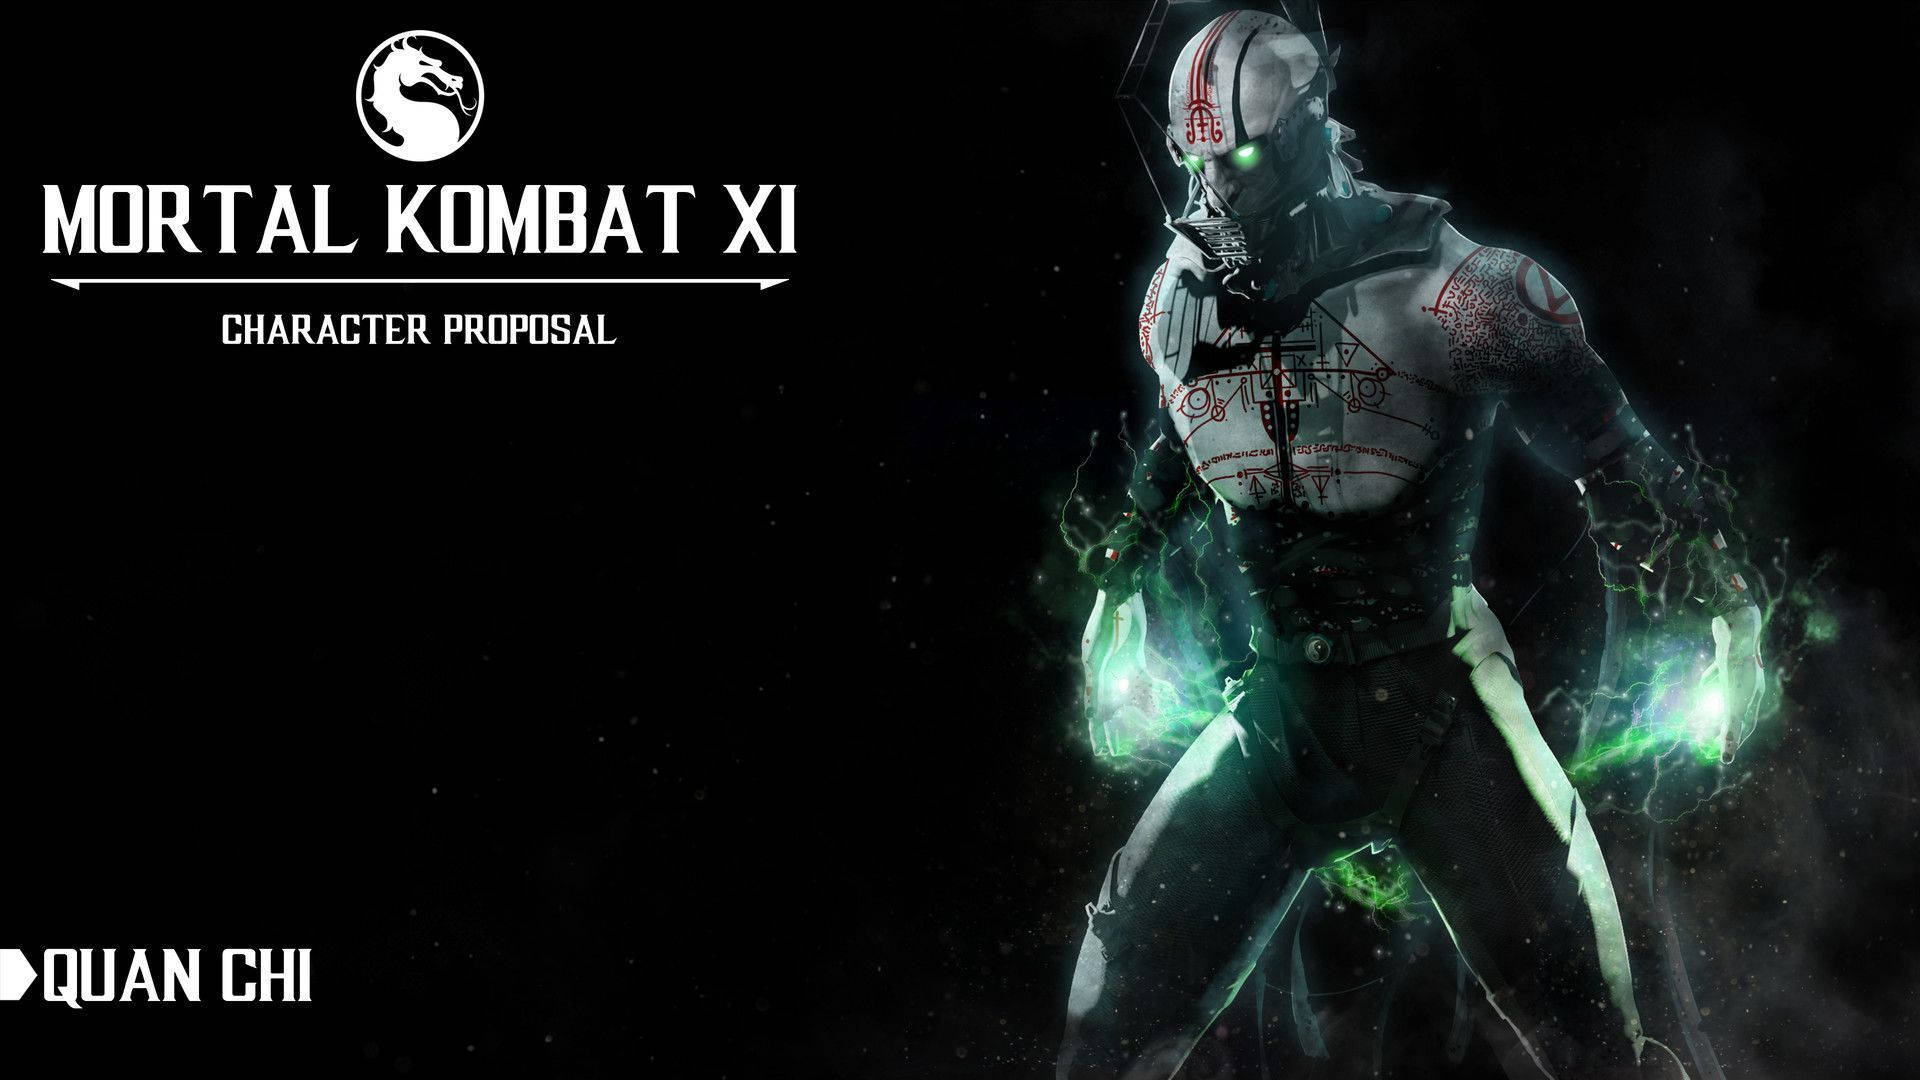 Top 999+ Mortal Kombat 11 Wallpaper Full HD, 4K✅Free to Use